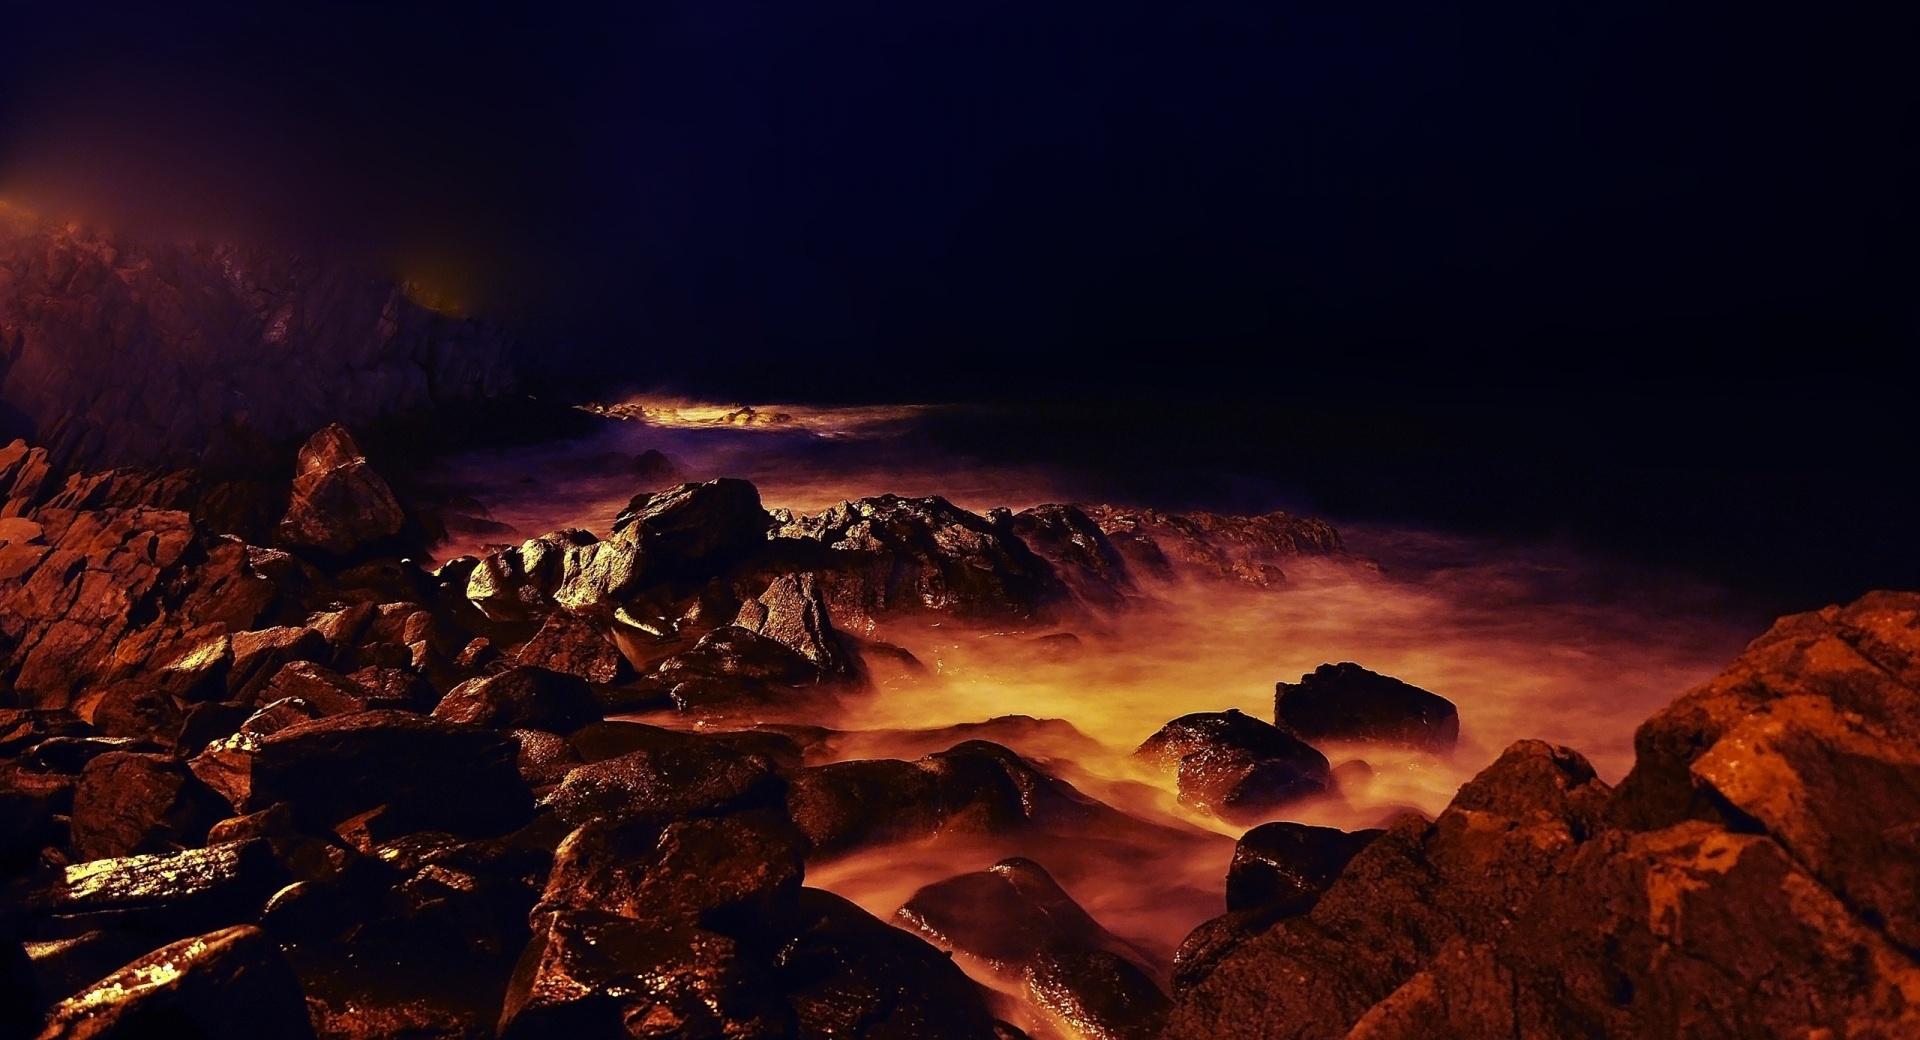 Sea Shore At Night at 1024 x 1024 iPad size wallpapers HD quality